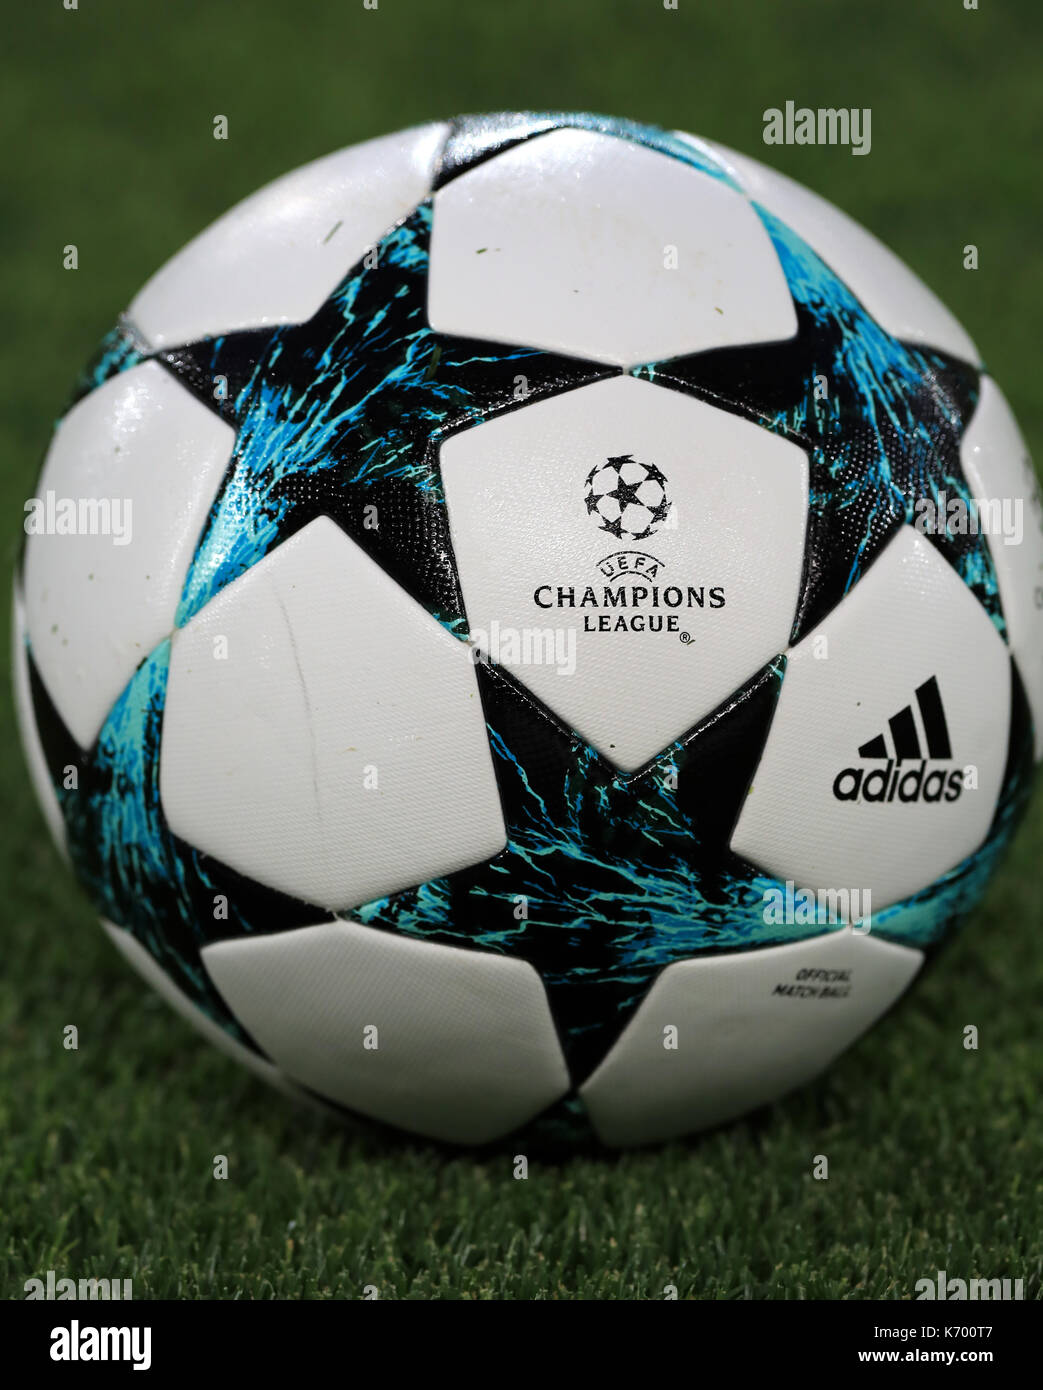 Champions league ball -Fotos und -Bildmaterial in hoher Auflösung – Alamy